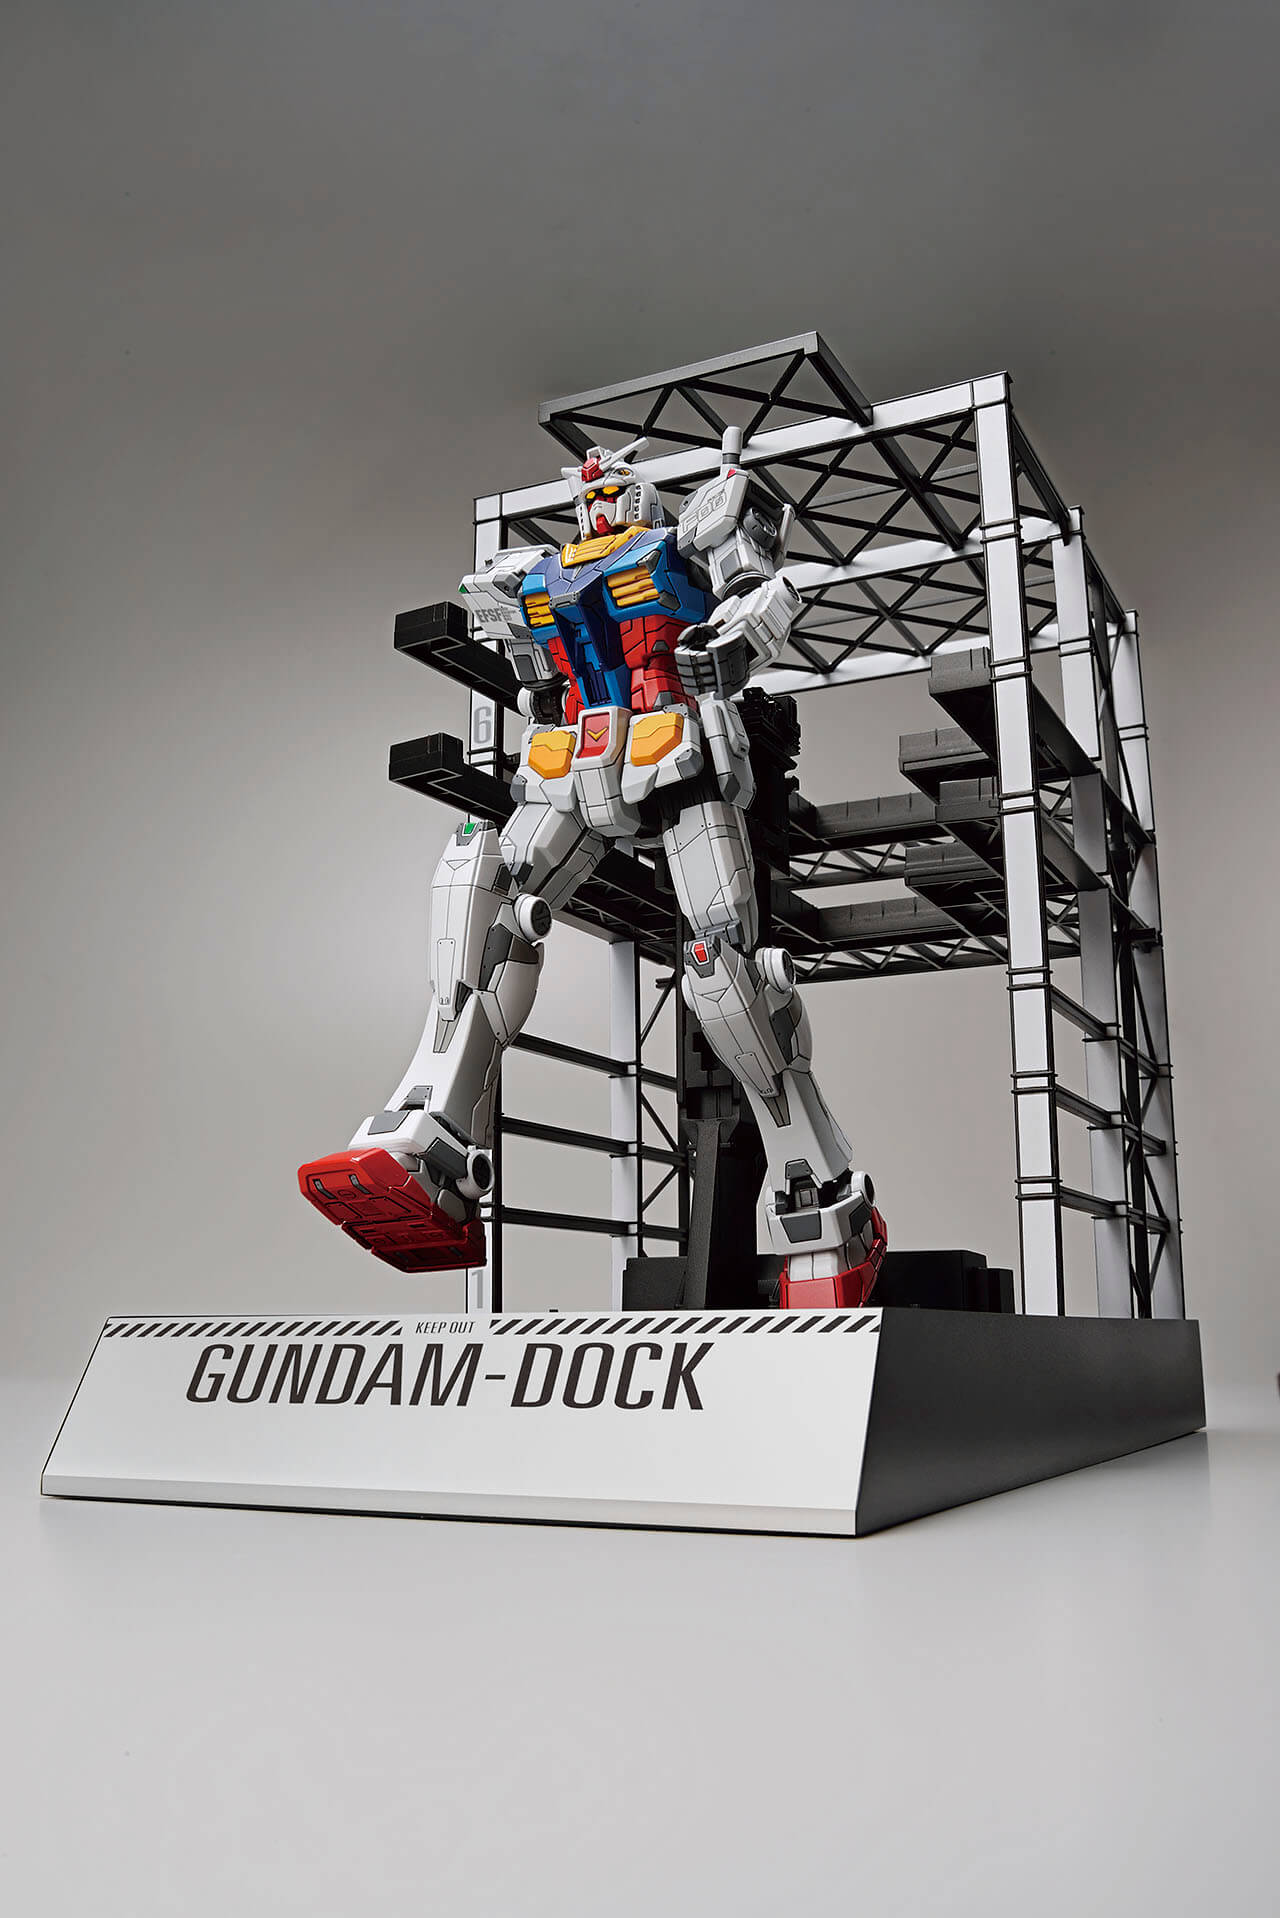 Gunpla 1/48 RX-78F00 Gundam Factory Yokohama Limited Edition LED Unit Japan